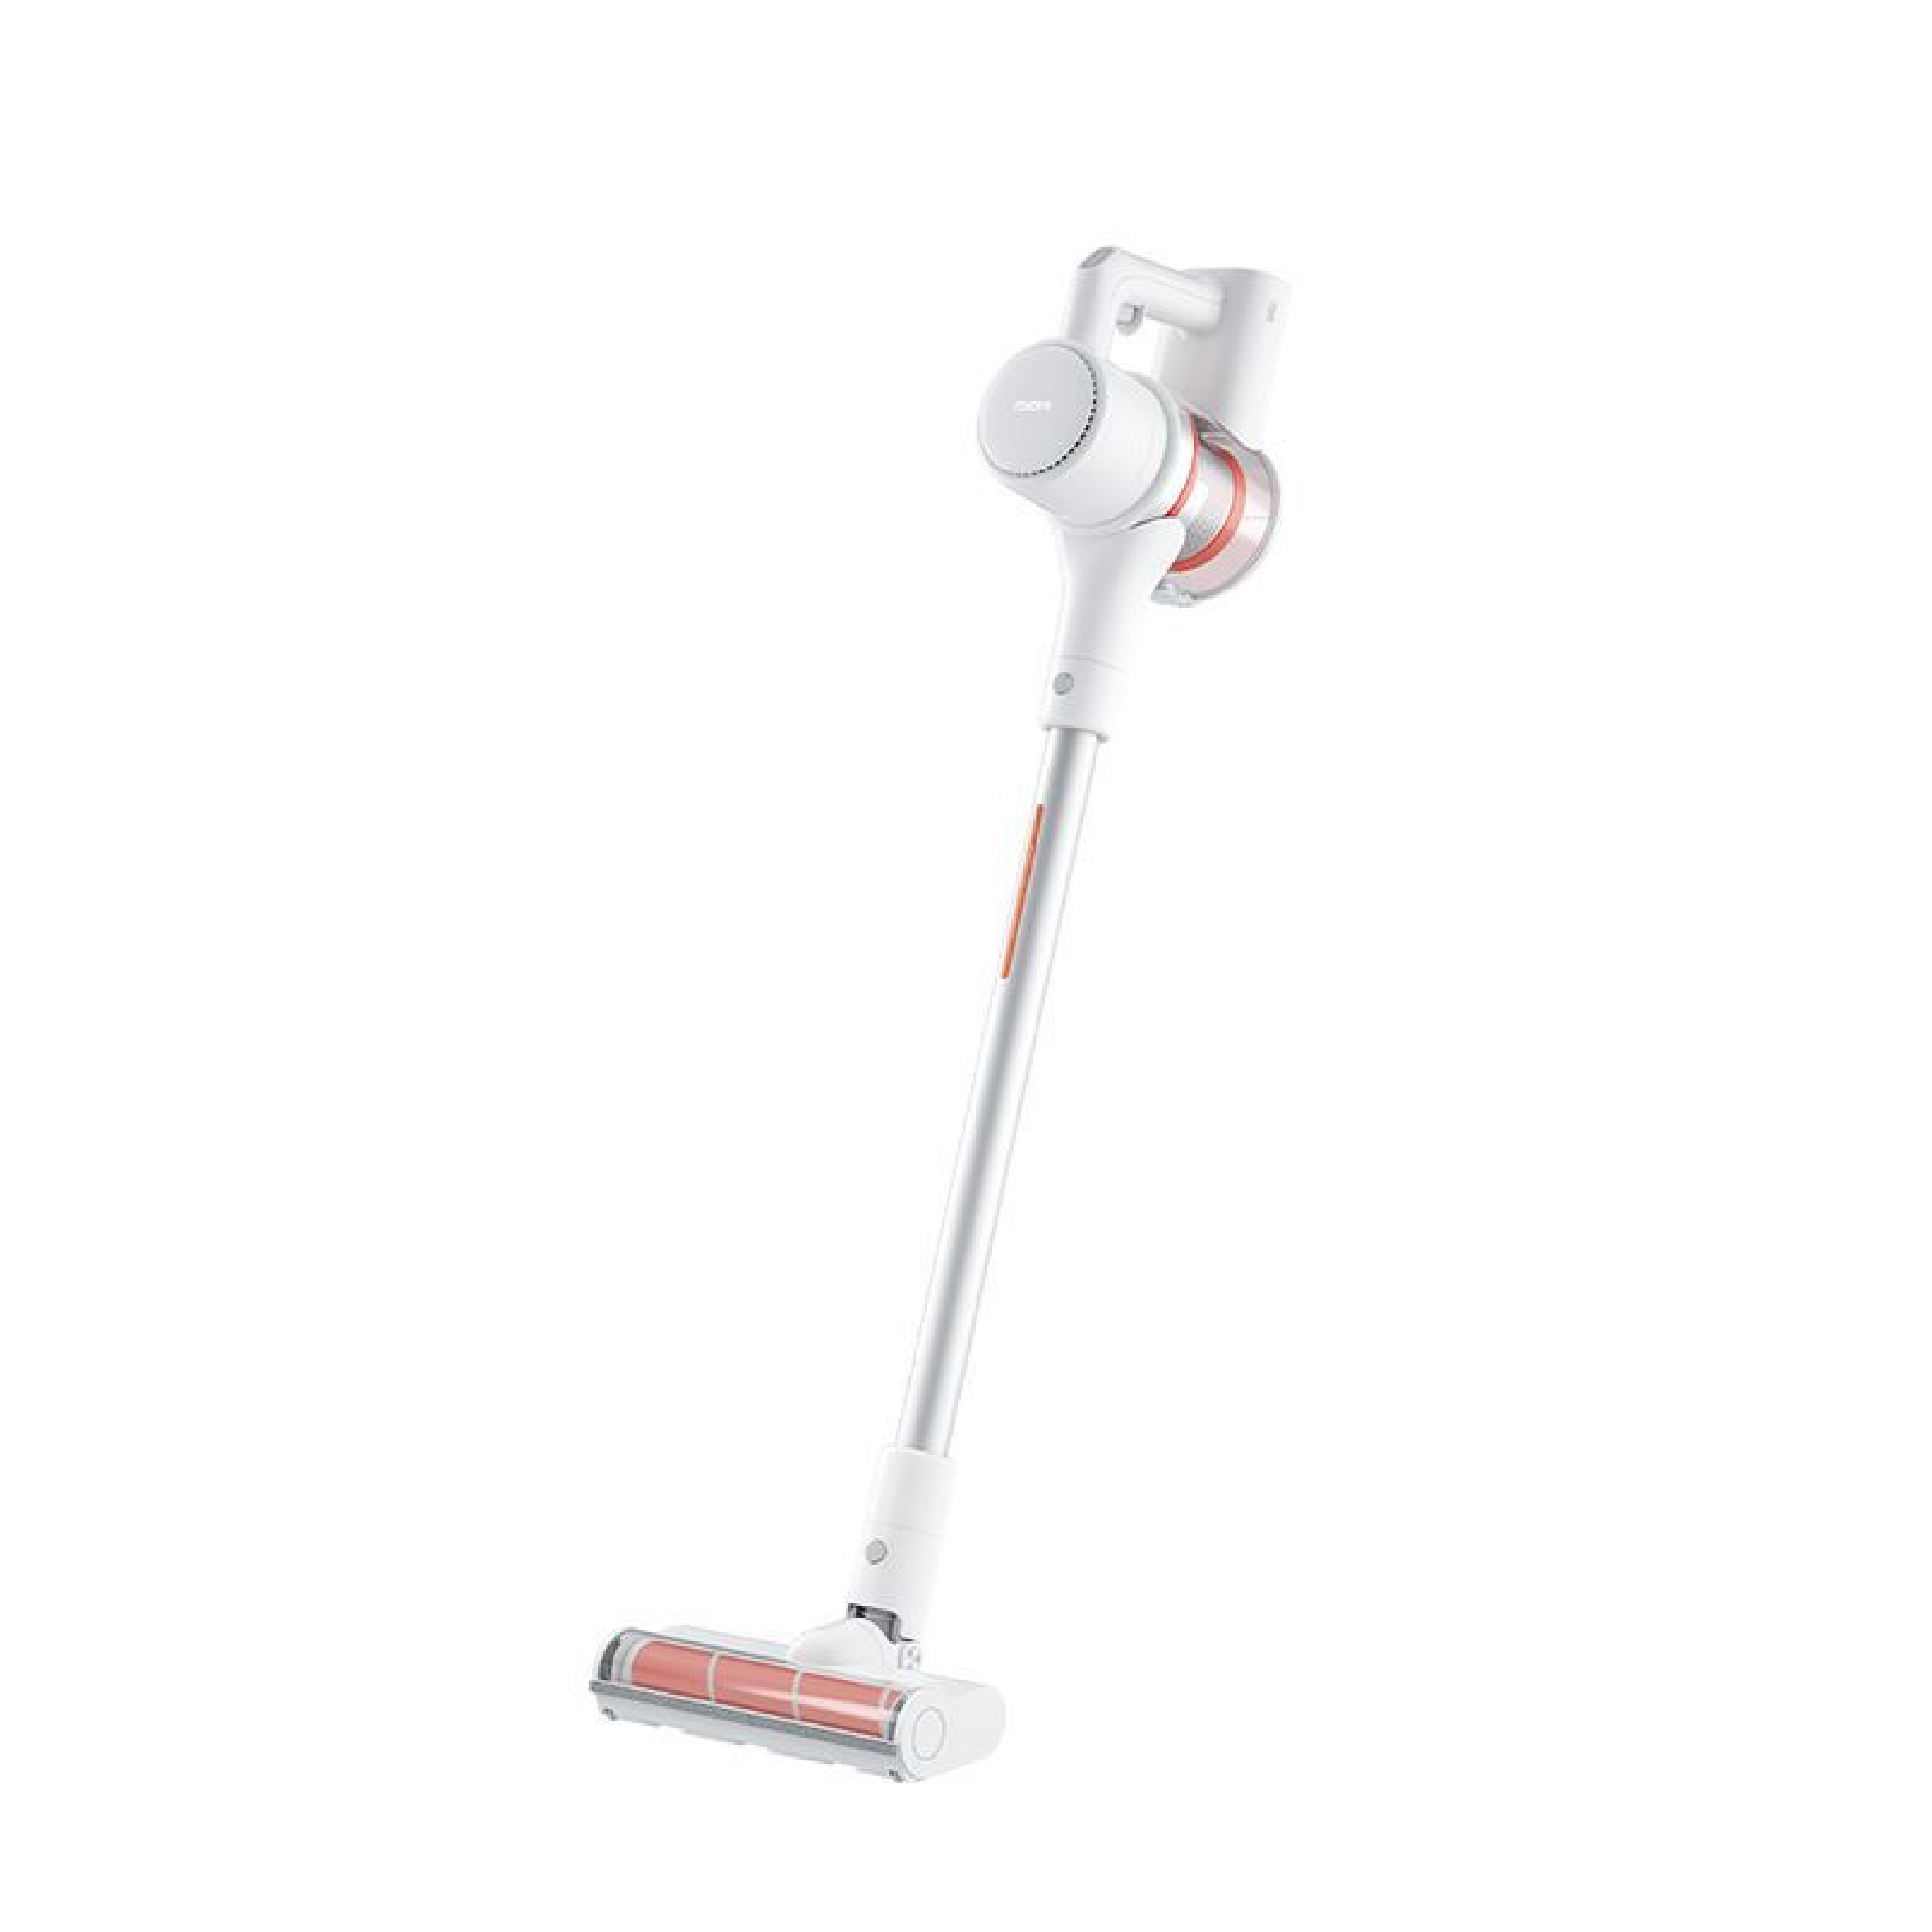 Roidmi Z1 Air White Cordless Vacuum Cleaner